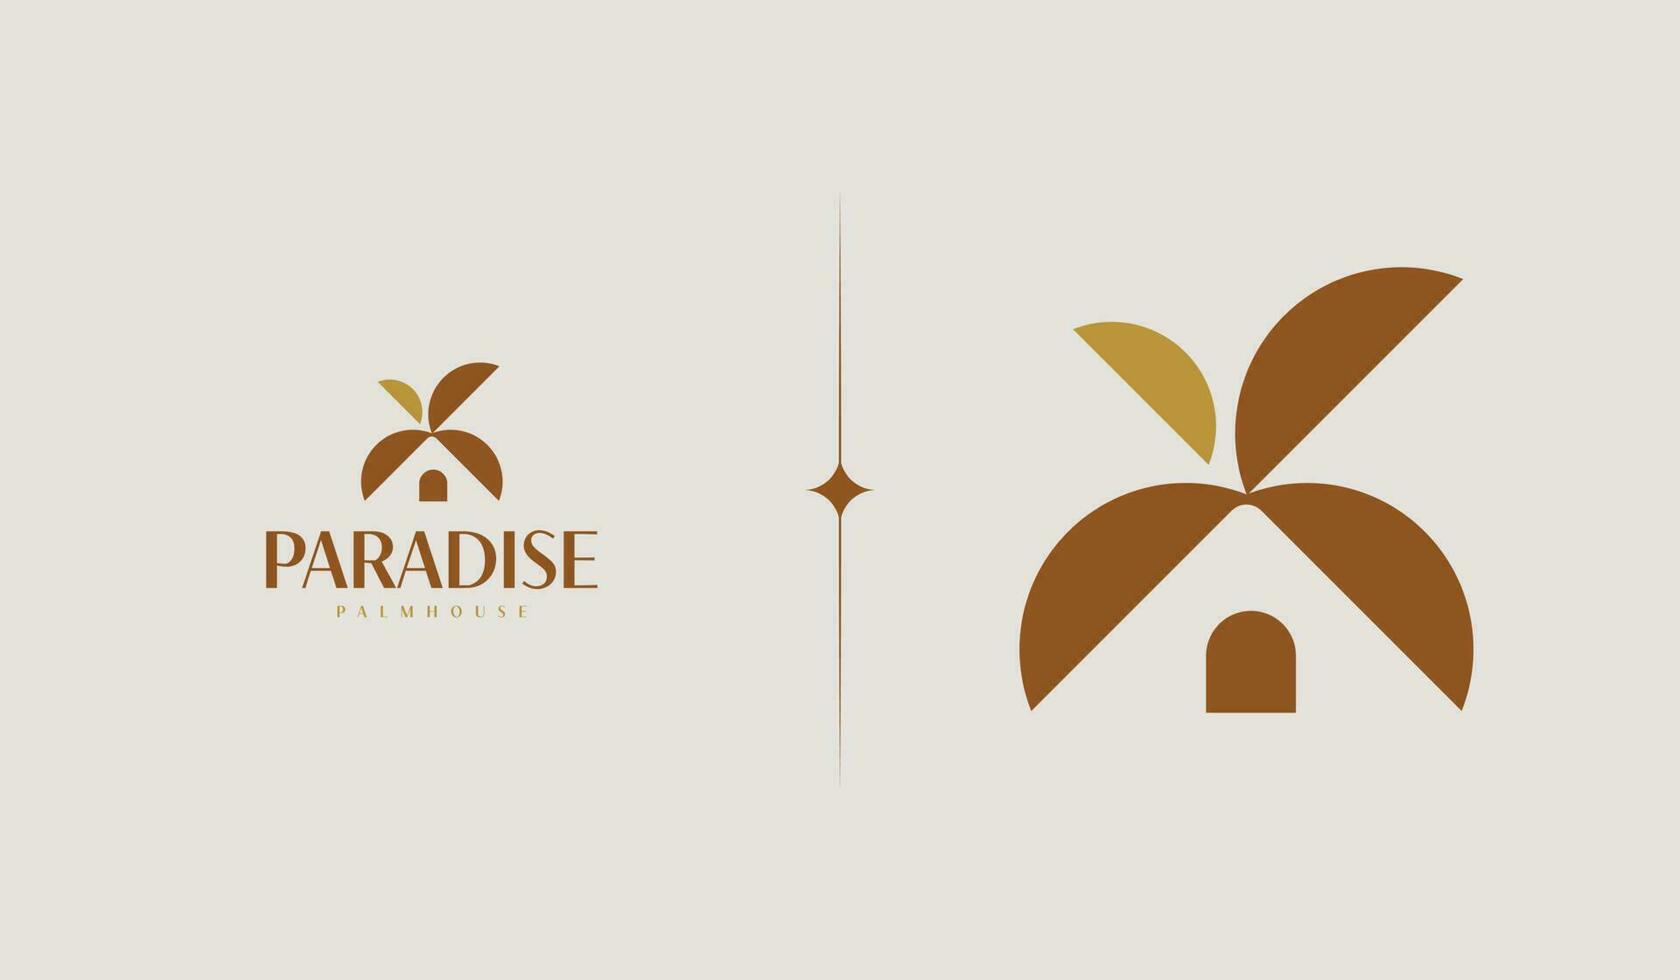 Palm House Summer Tropical. Universal creative premium symbol. Vector sign icon logo template. Vector illustration